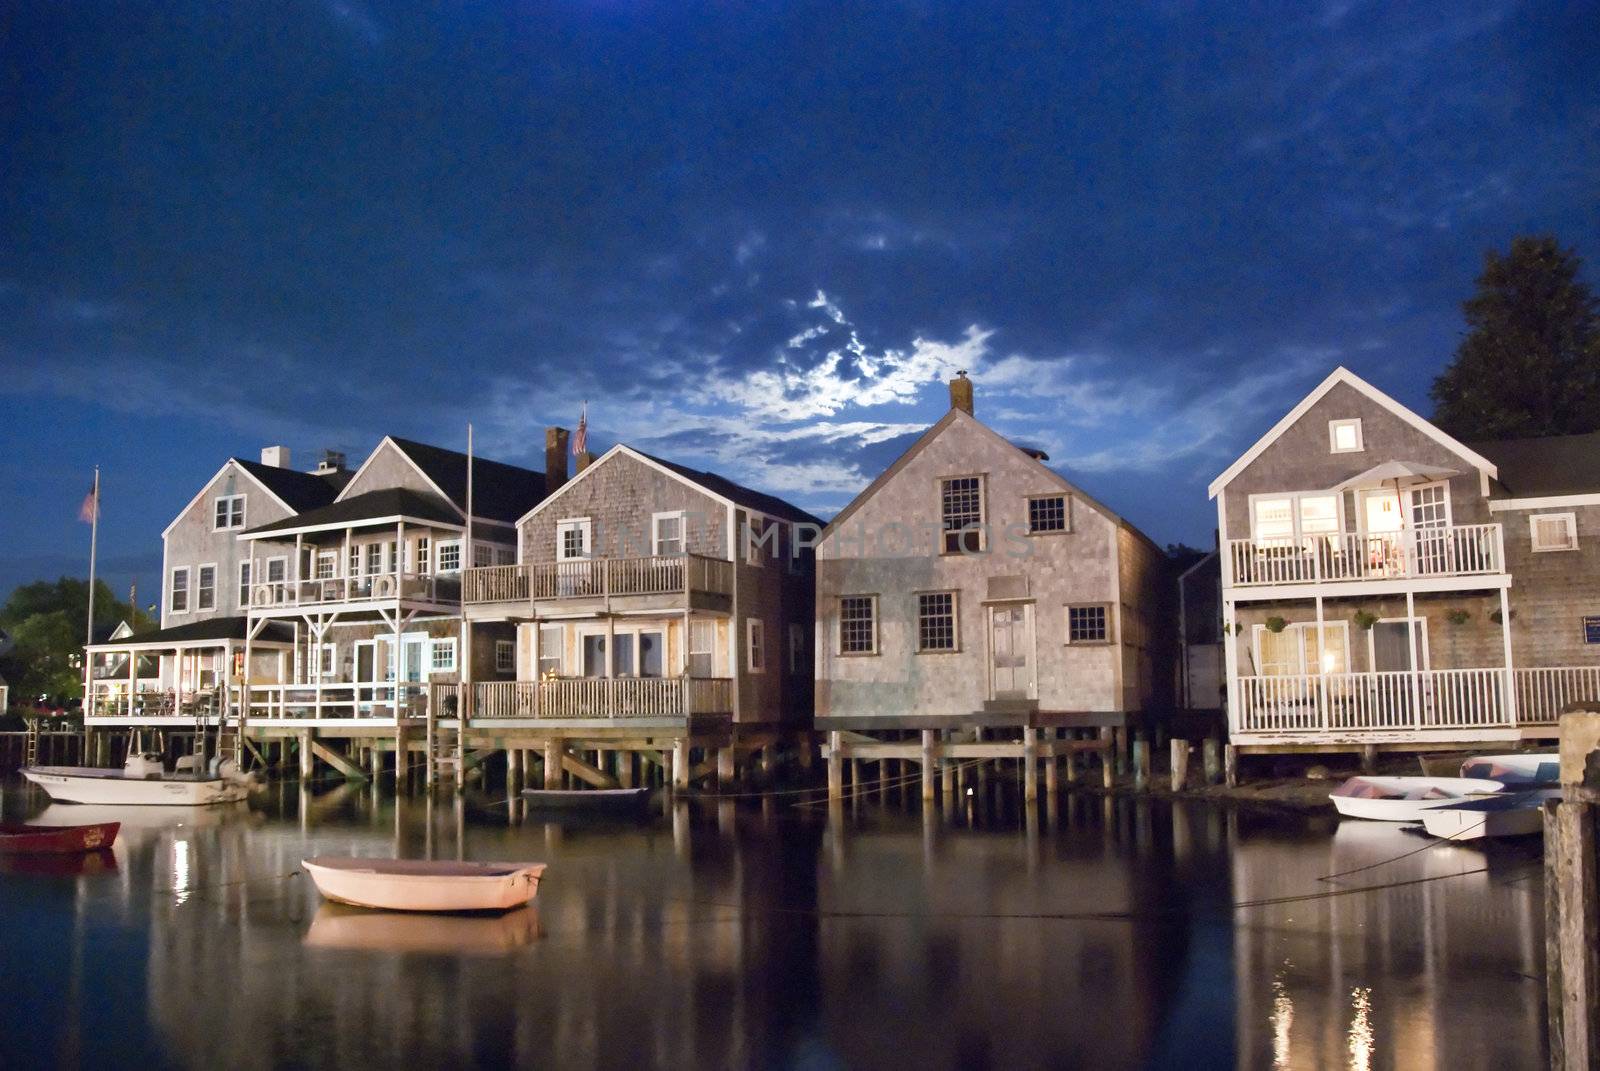 Nantucket by Night, 2008 by jovannig